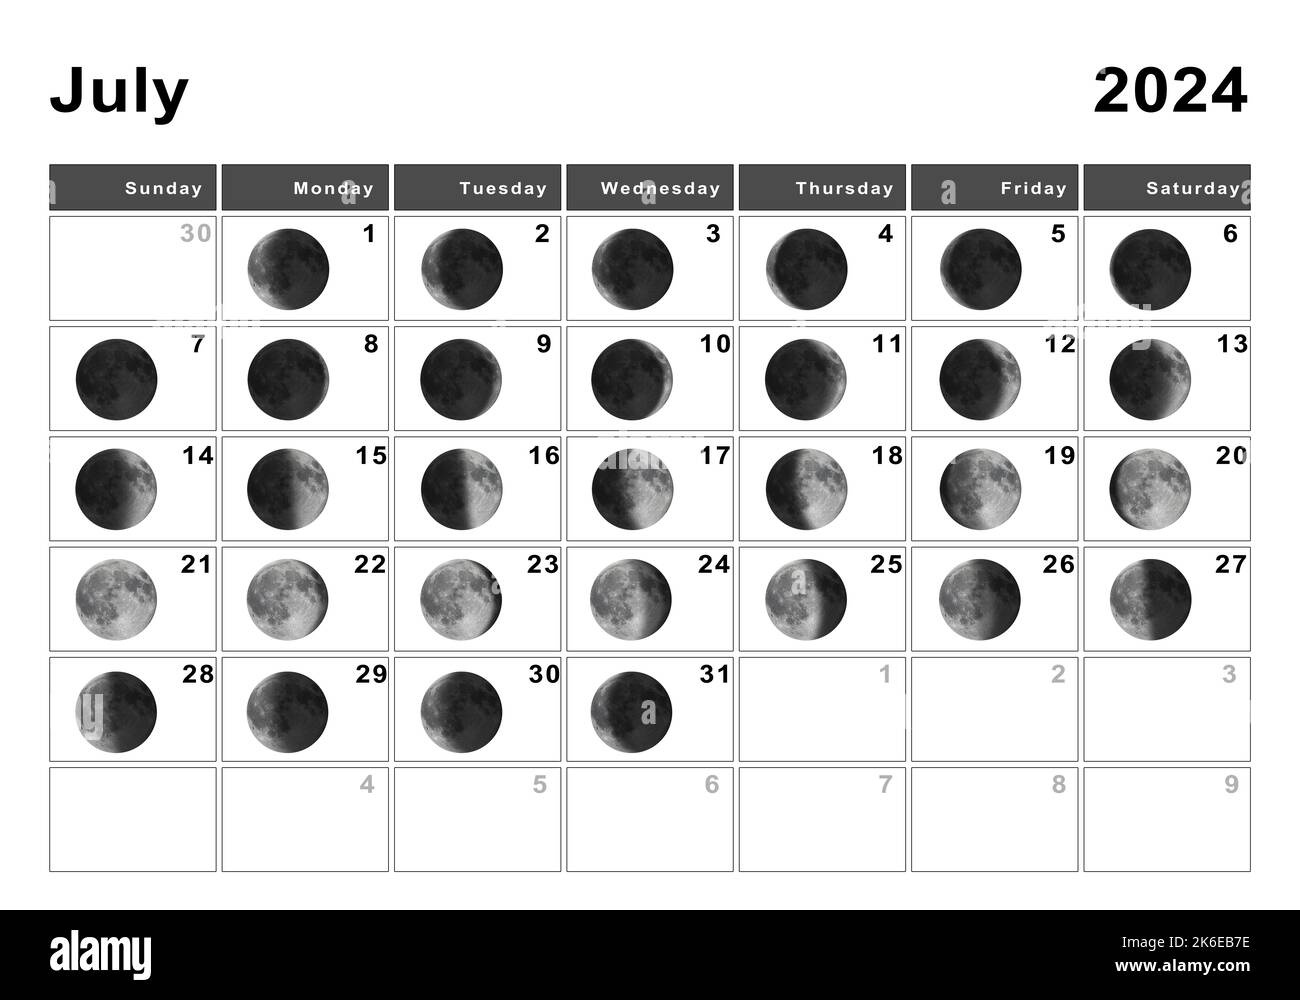 July 2024 Lunar Calendar, Moon Cycles, Moon Phases Stock Photo - Alamy with regard to July 11 Lunar Calendar 2024